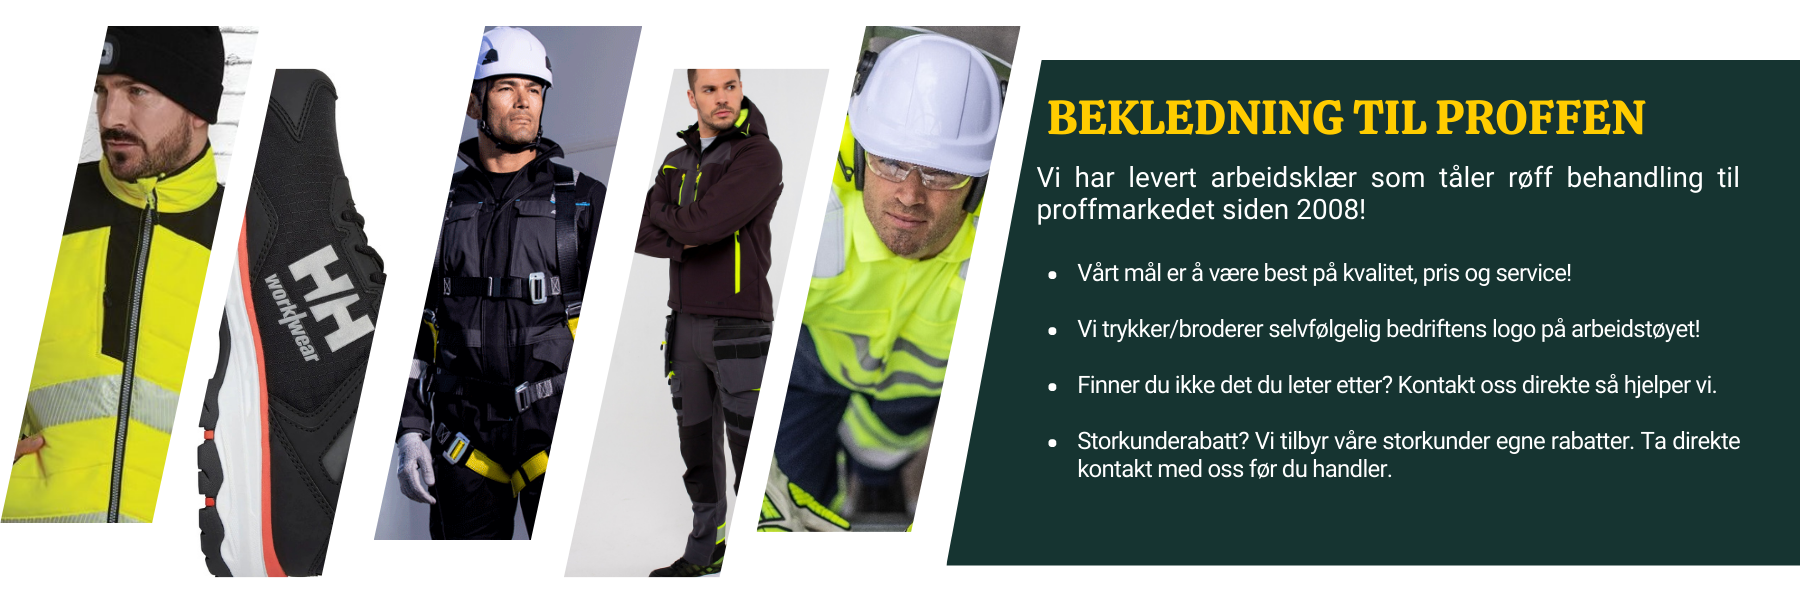 Joker Engros AS | Industrielle rengjøringsmidler Norge